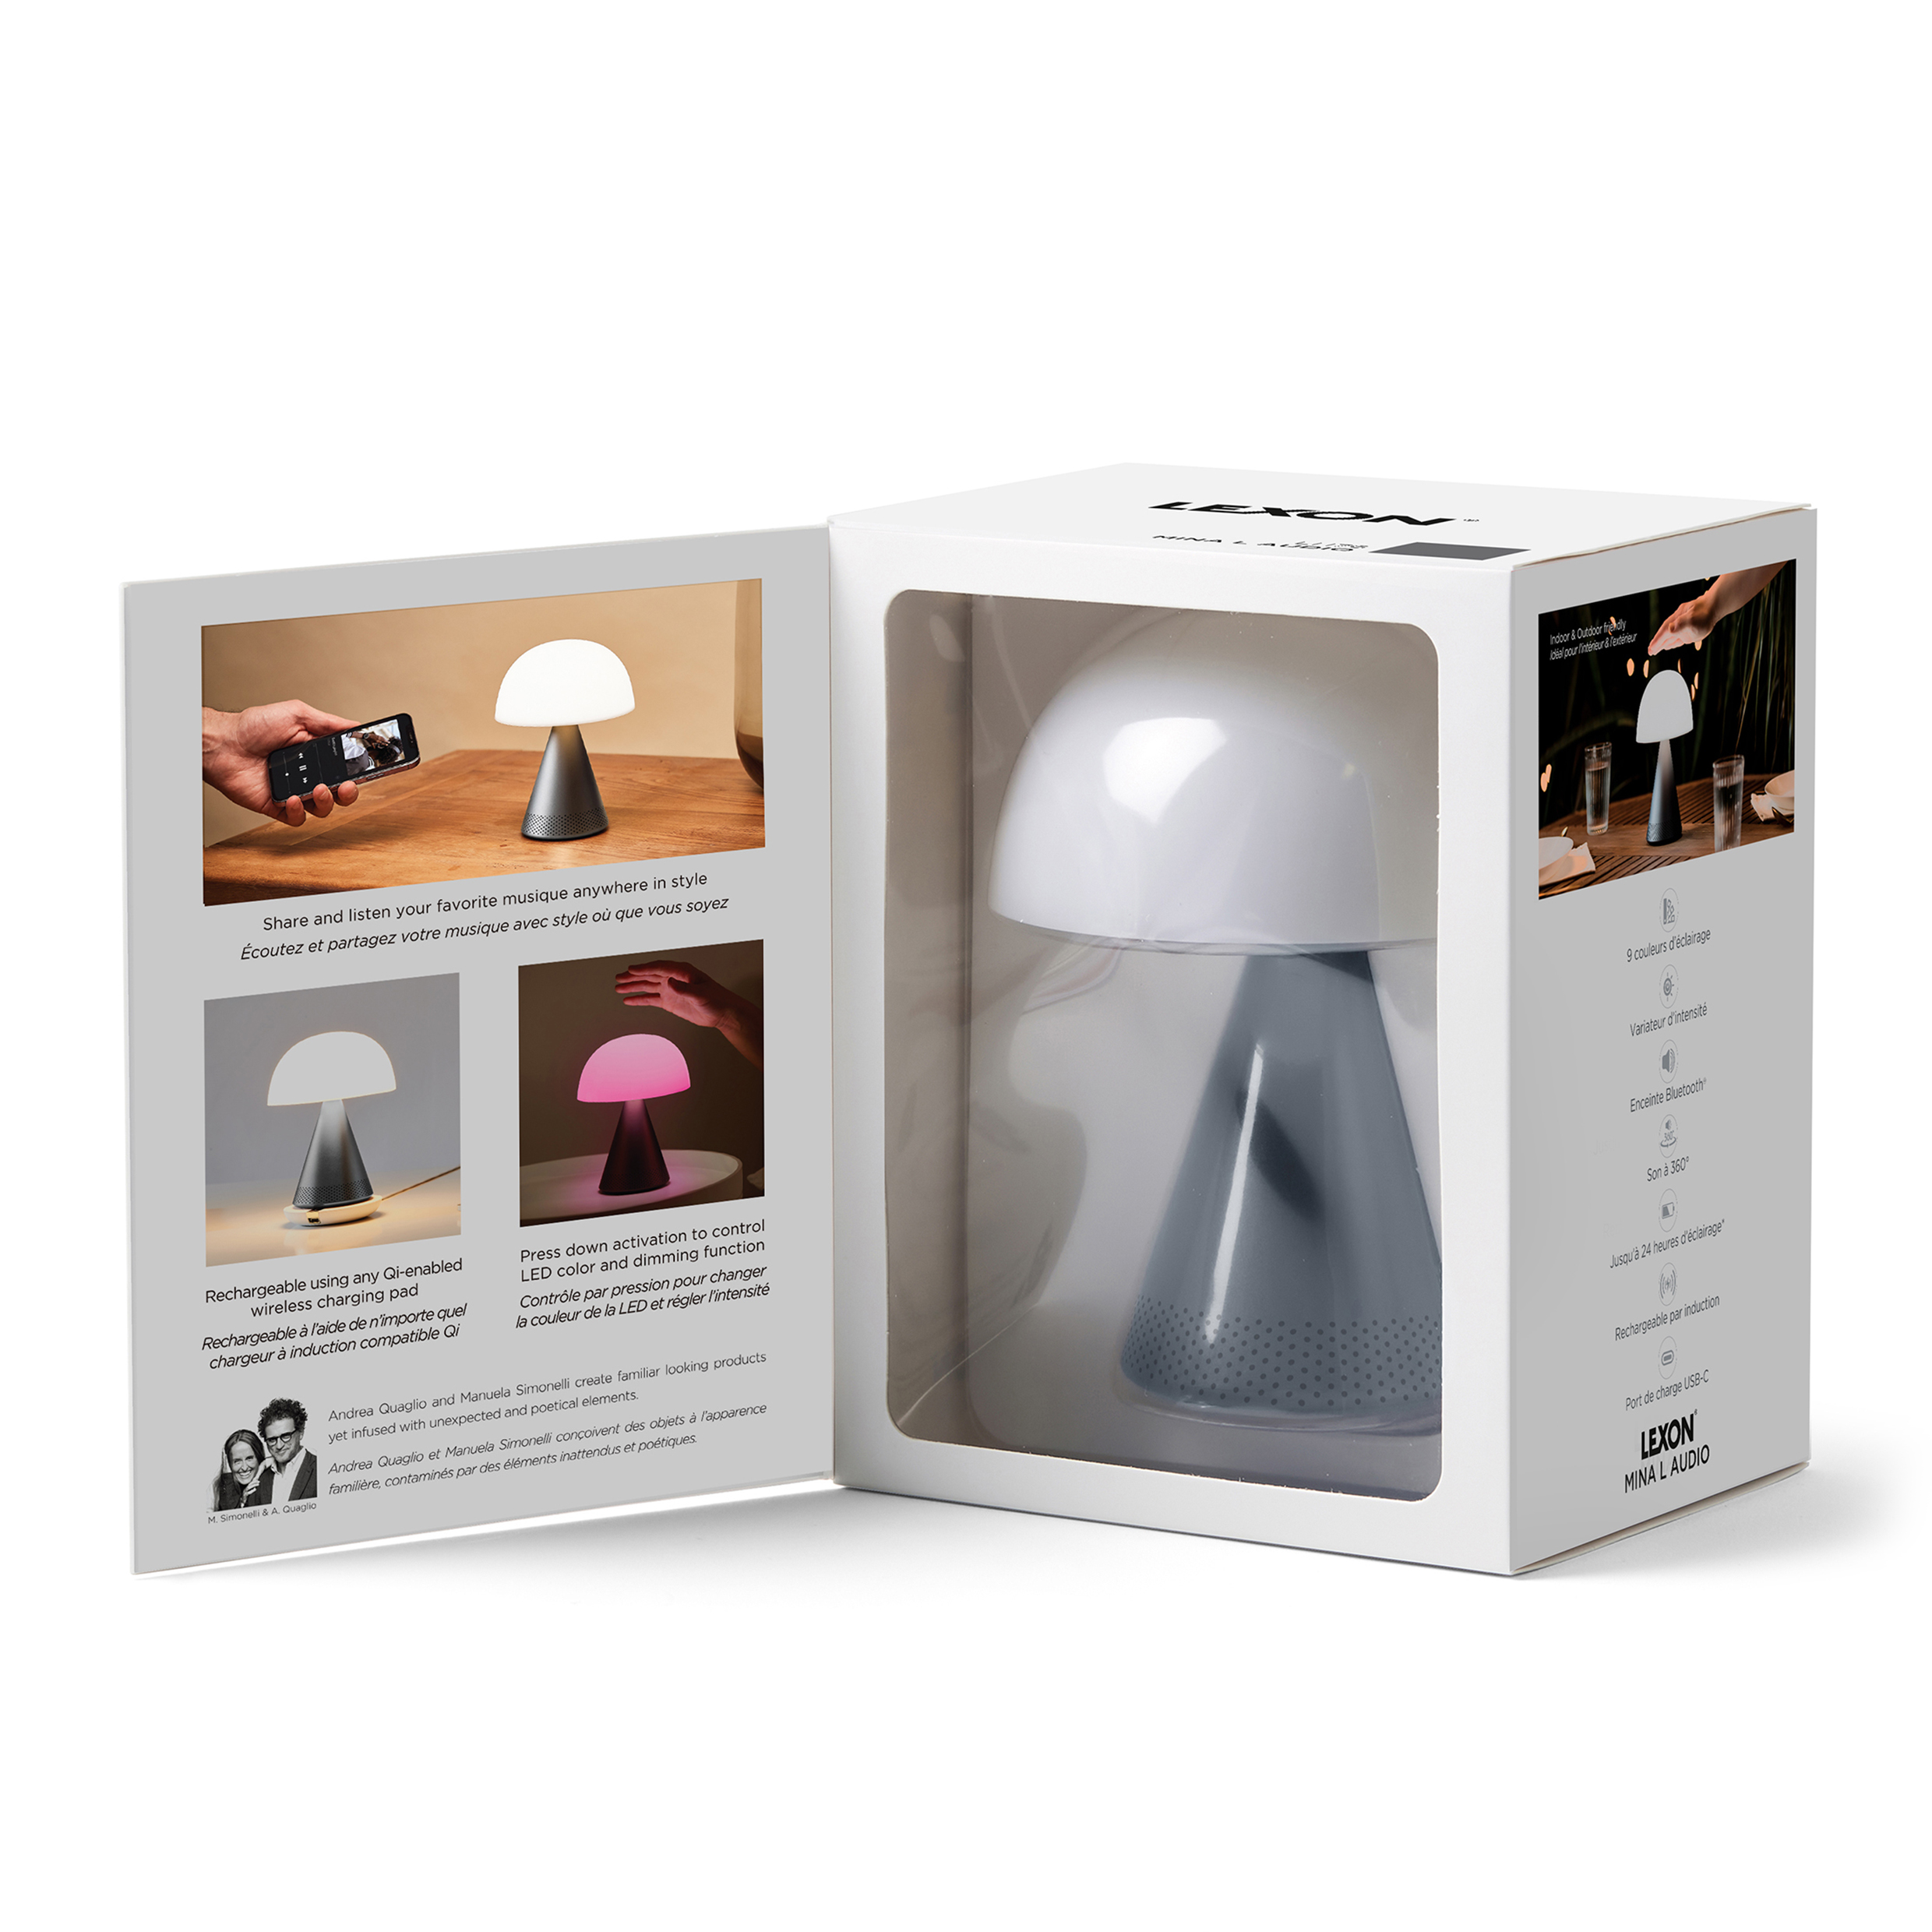 LEXON DESIGN // MINA L AUDIO - TABLE LAMP + SOUND | ALUMINUM